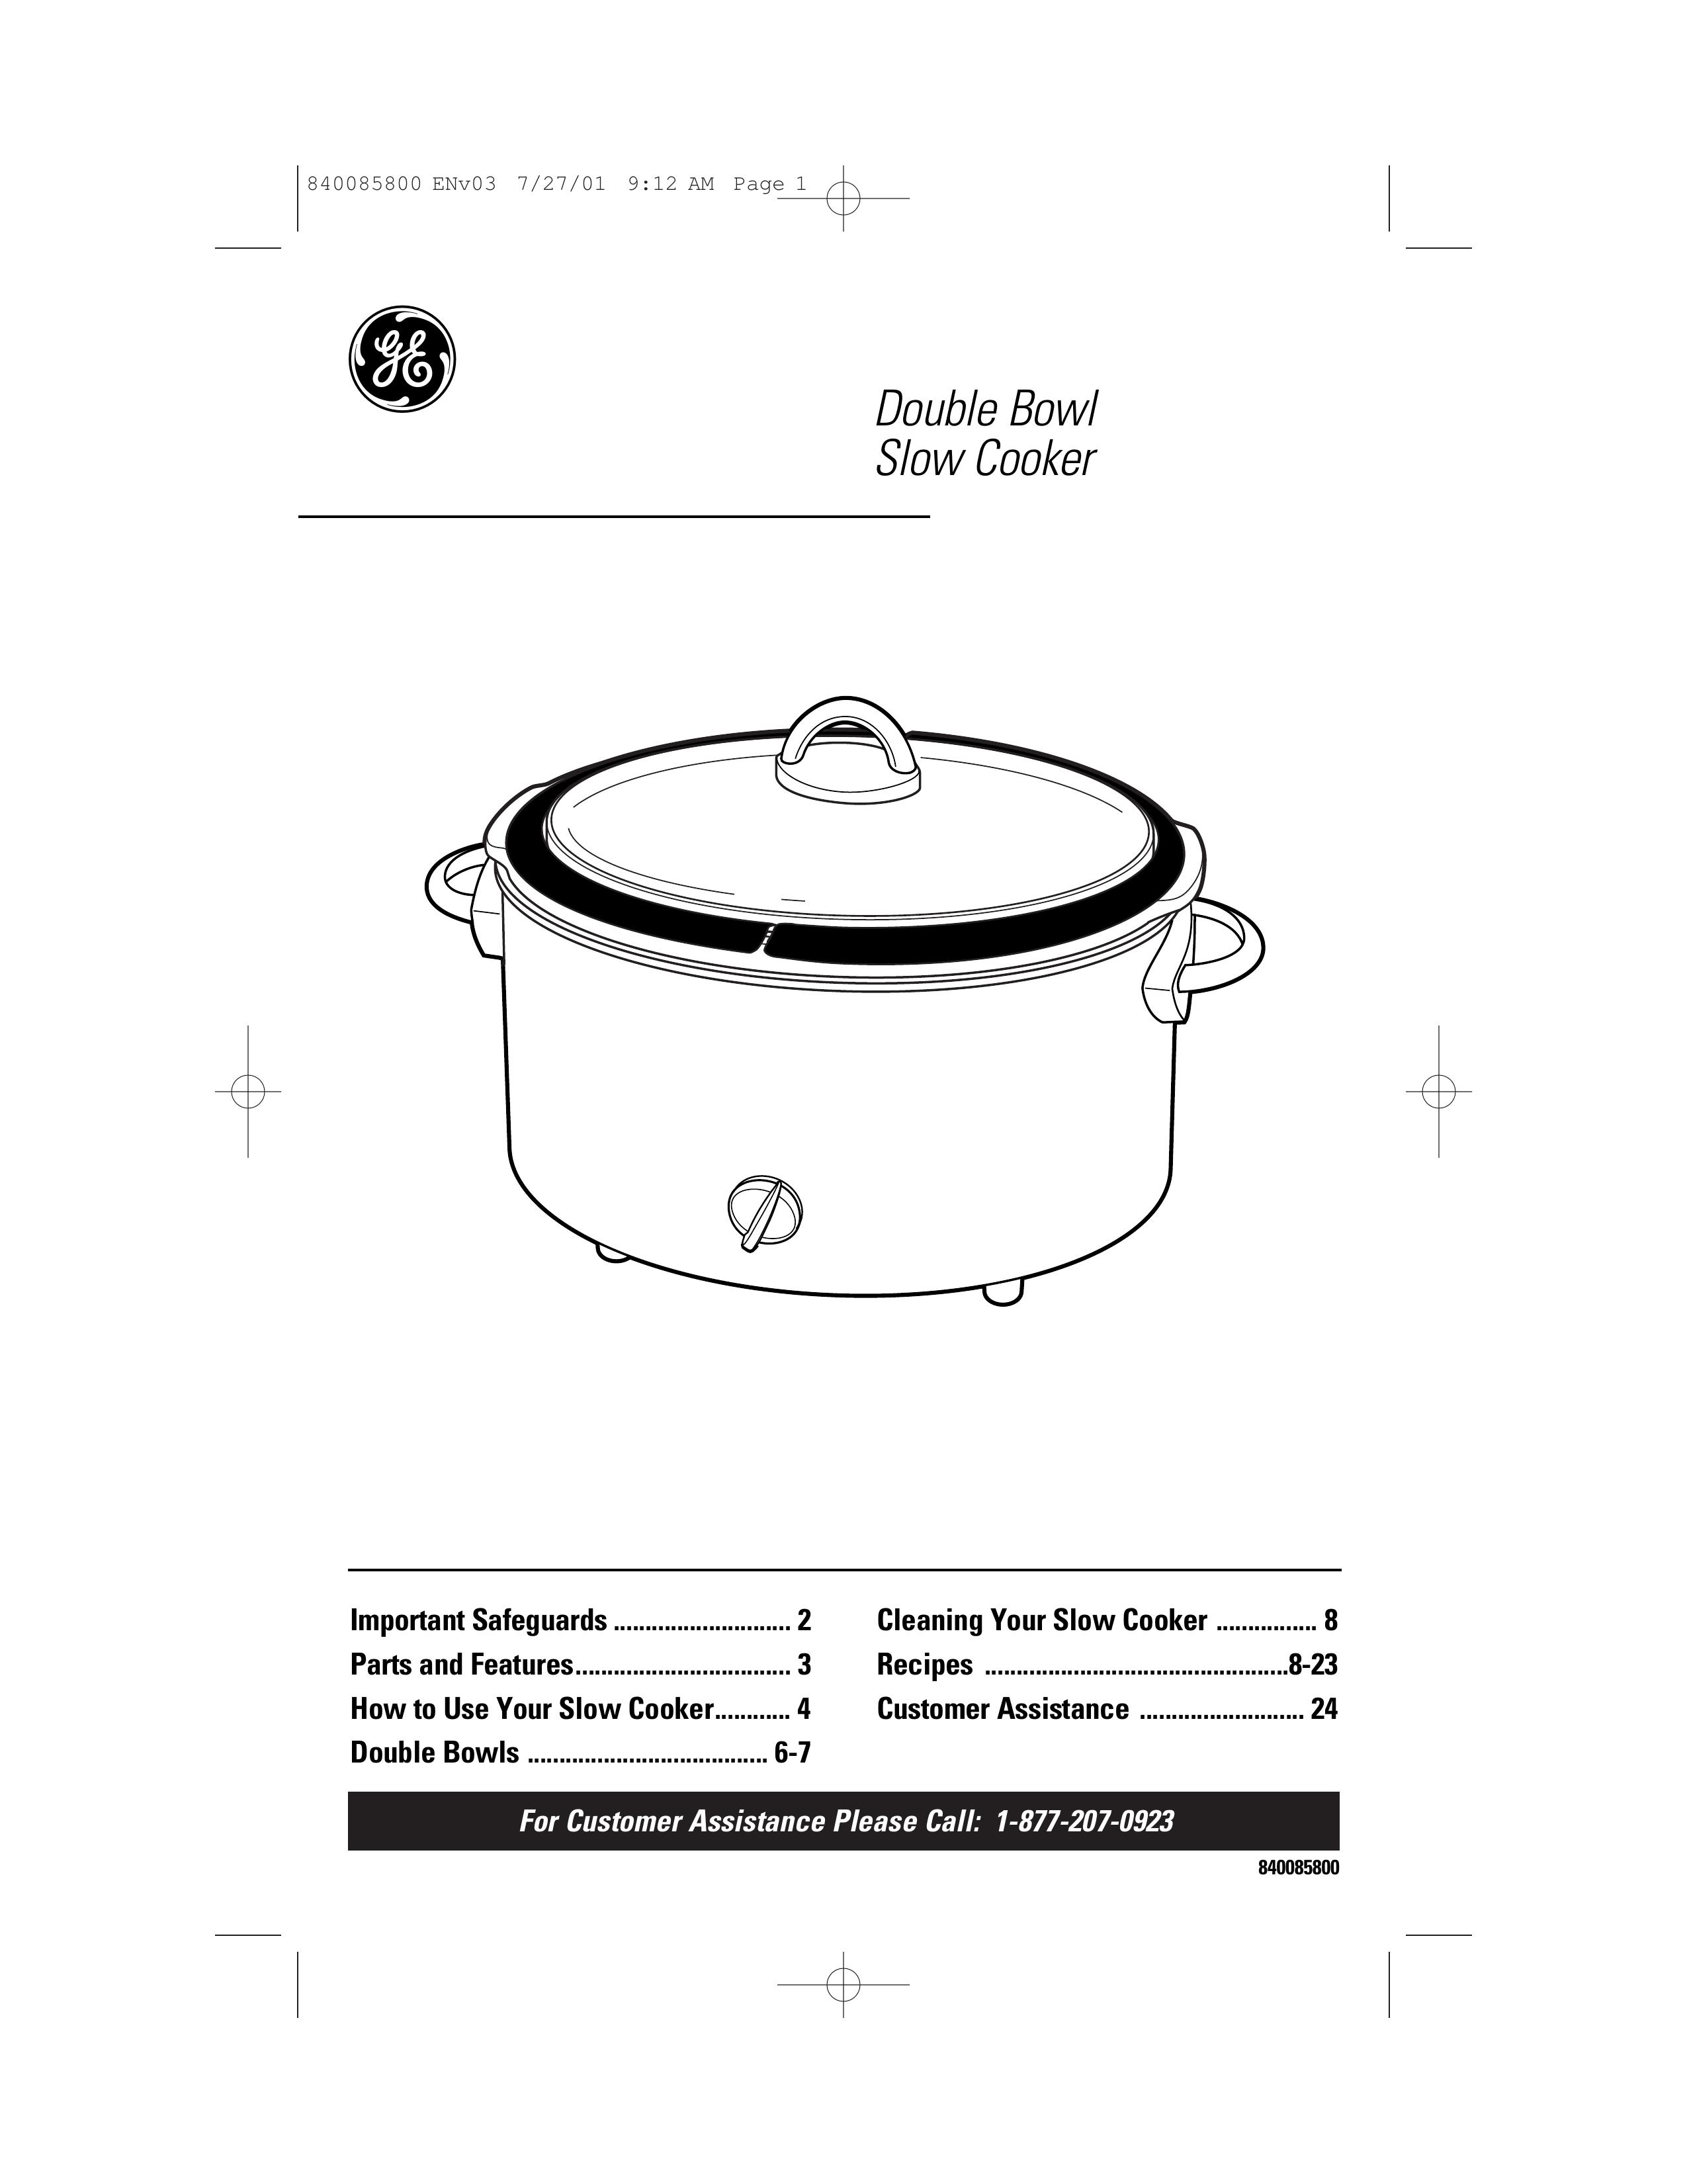 GE 106851 Slow Cooker User Manual